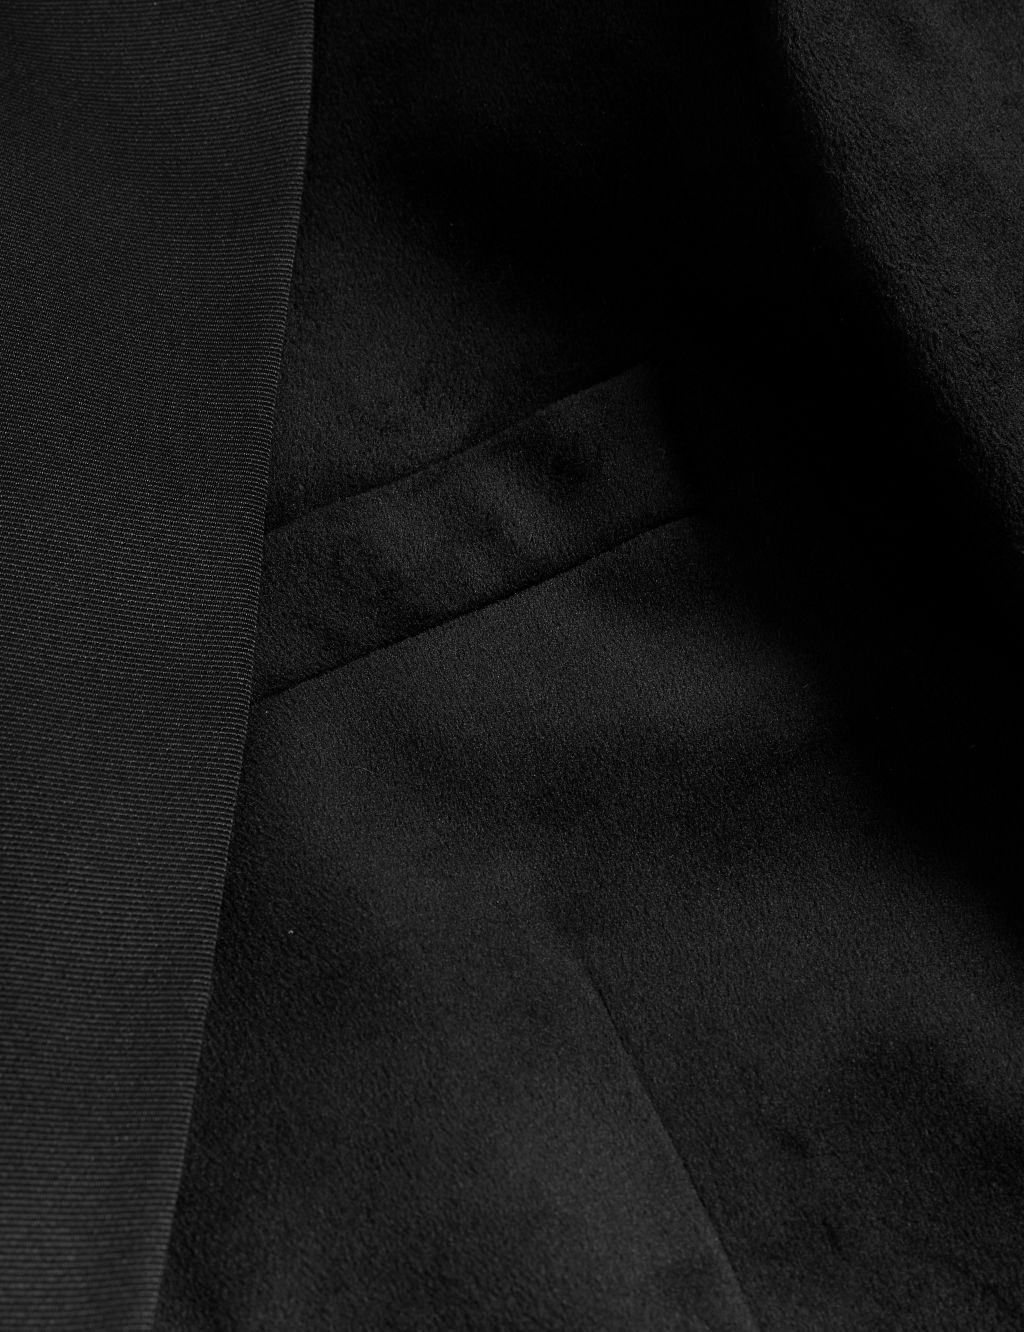 Slim Fit Velvet Tuxedo Jacket | M&S Collection | M&S